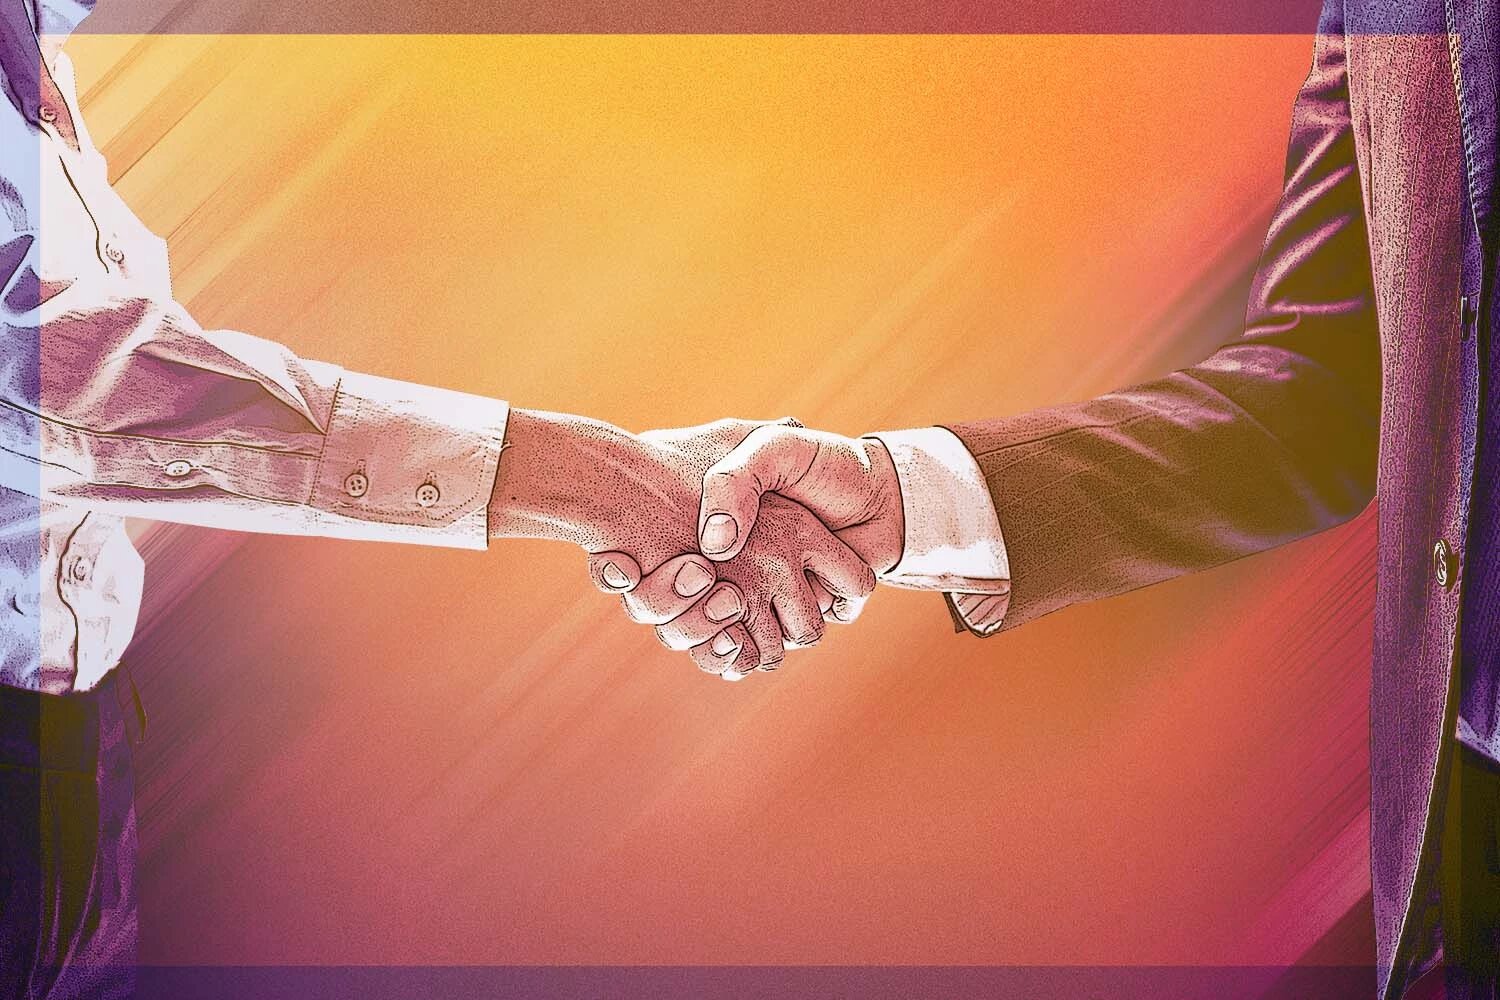 Two cartoon businessmen shaking hands